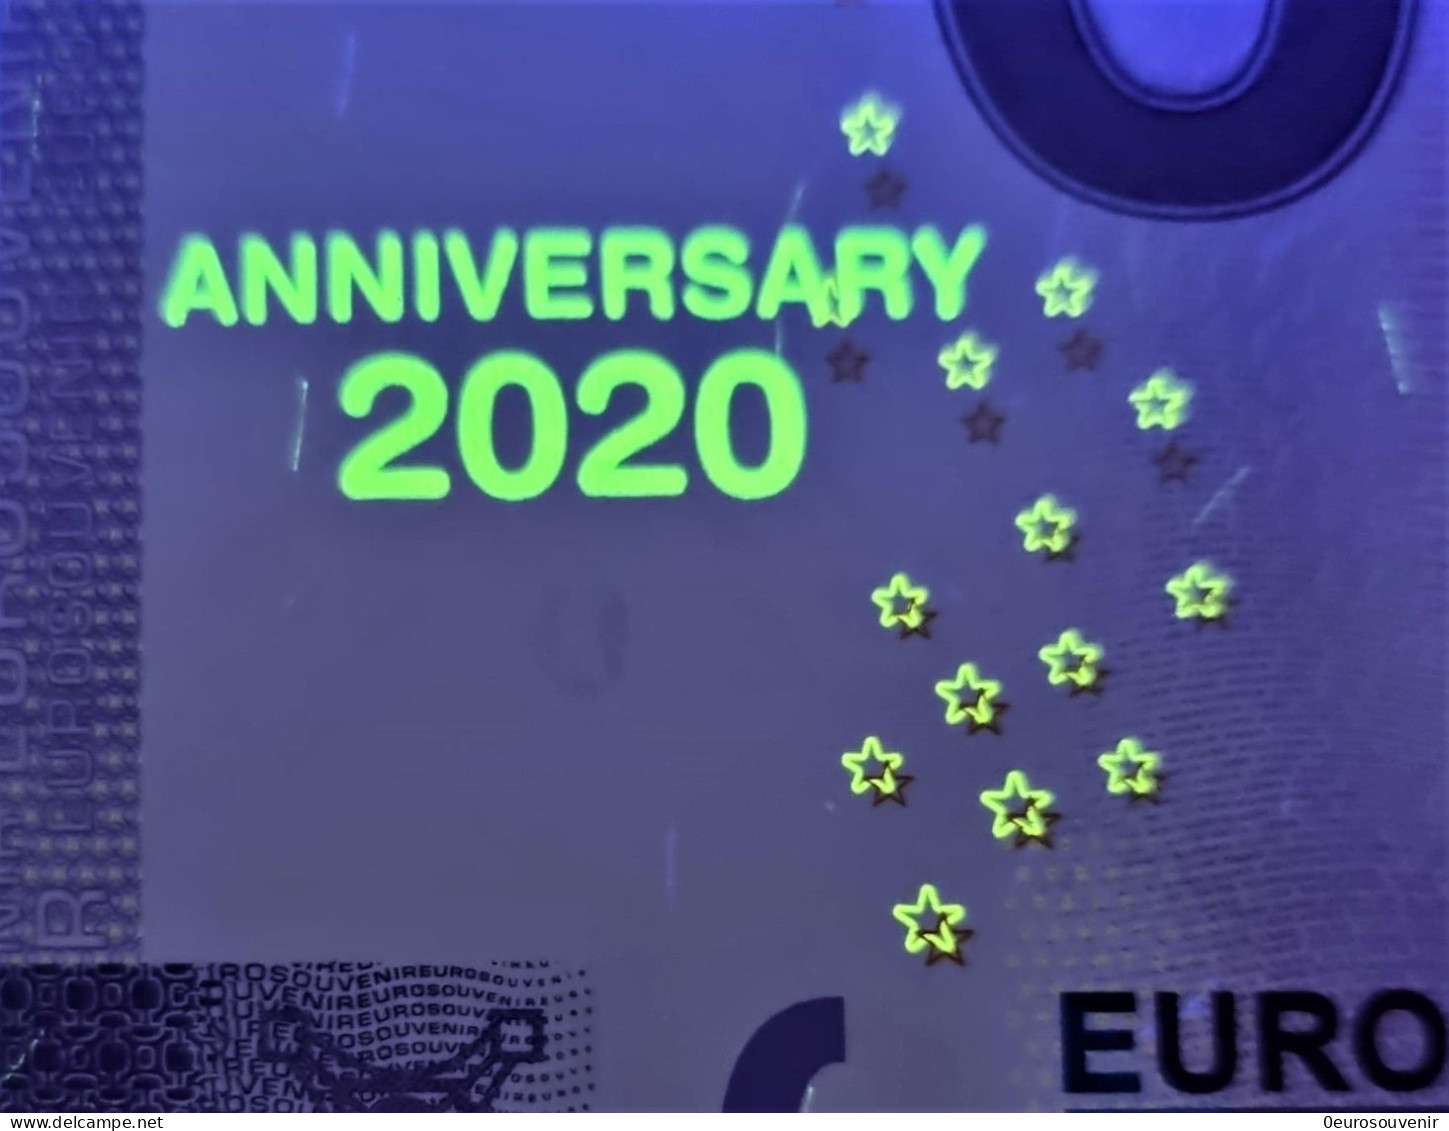 0-Euro TEAC 2020-1 THE QUIET MAN IRELAND Set NORMAL+ANNIVERSARY - Privatentwürfe